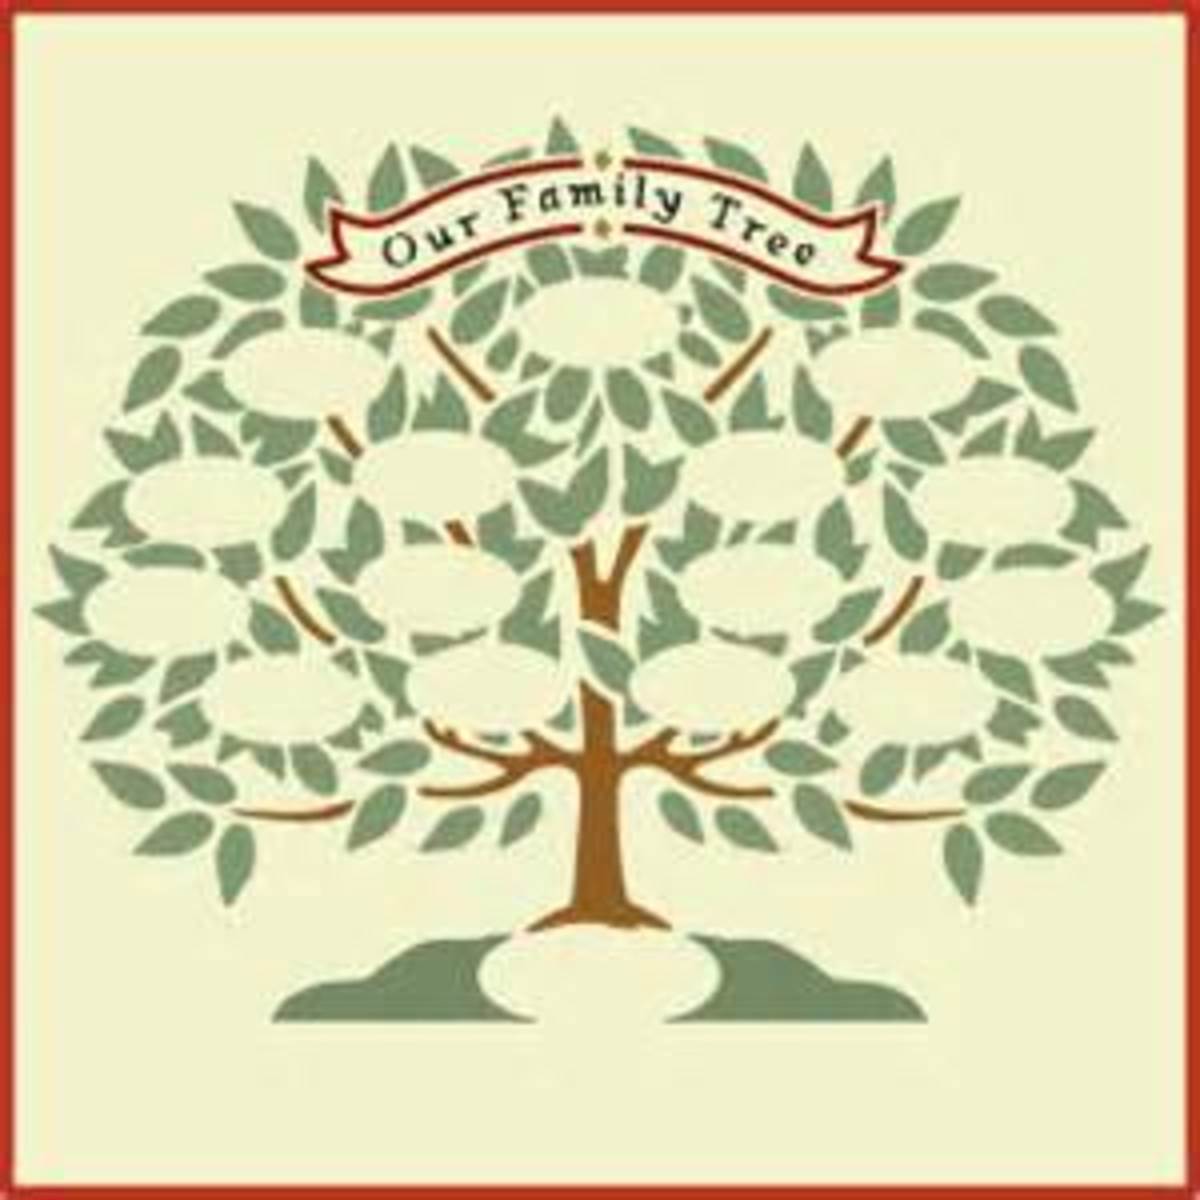 genealogy-club-program-ideas